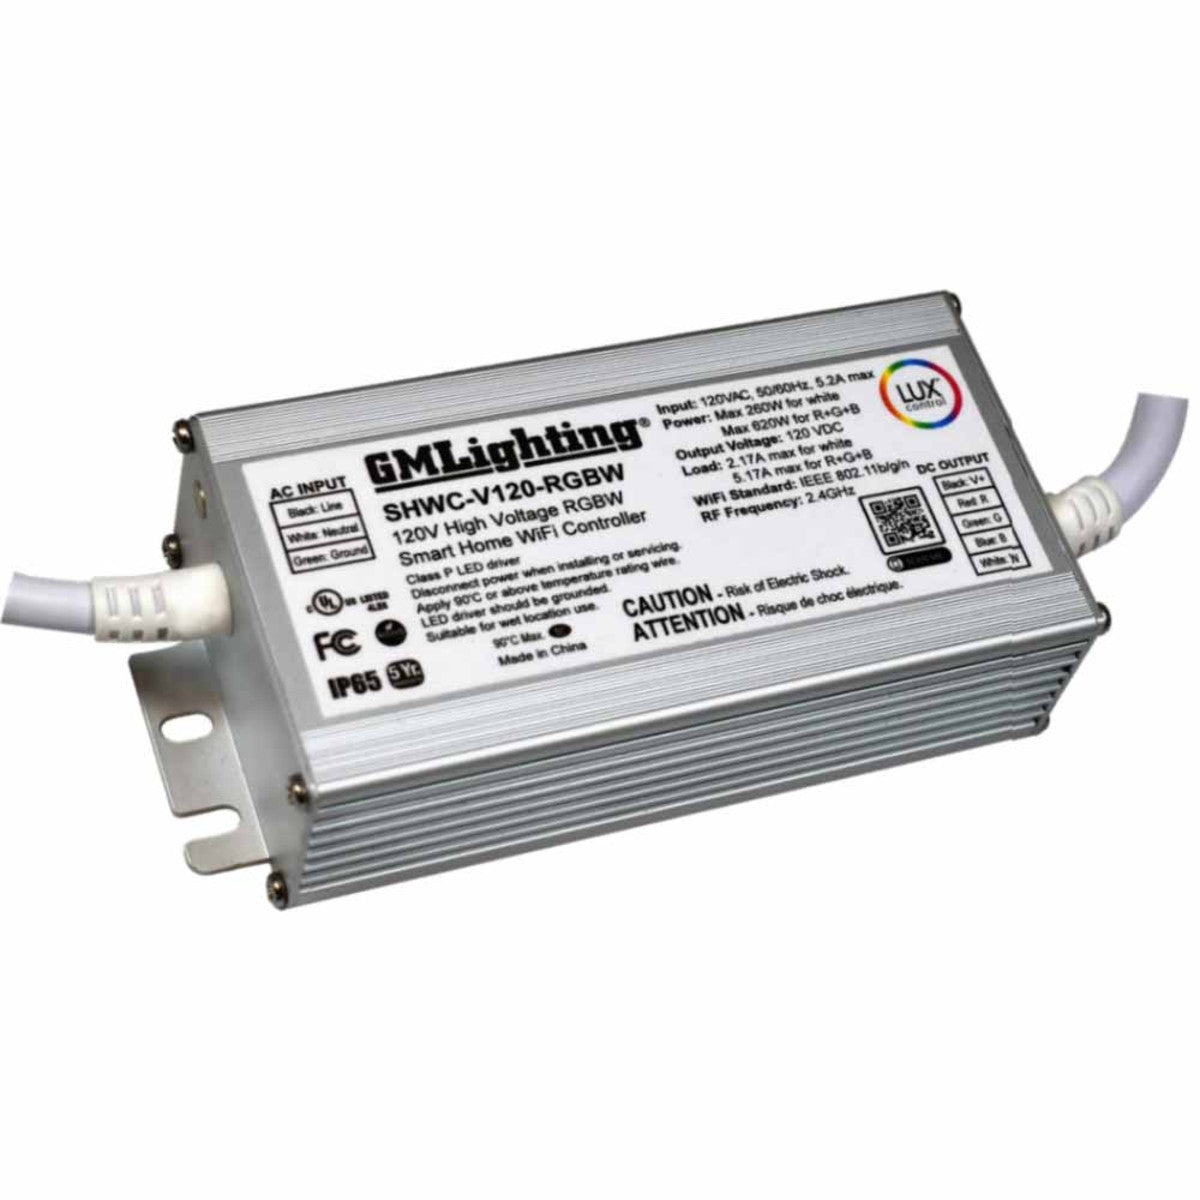 GML-SHWC-V120-RGBWGM Lighting SHWC-V120-RGBW LUXcontrol™ SMART Vision120 RGBW WIFI CONTROLLER (120V)